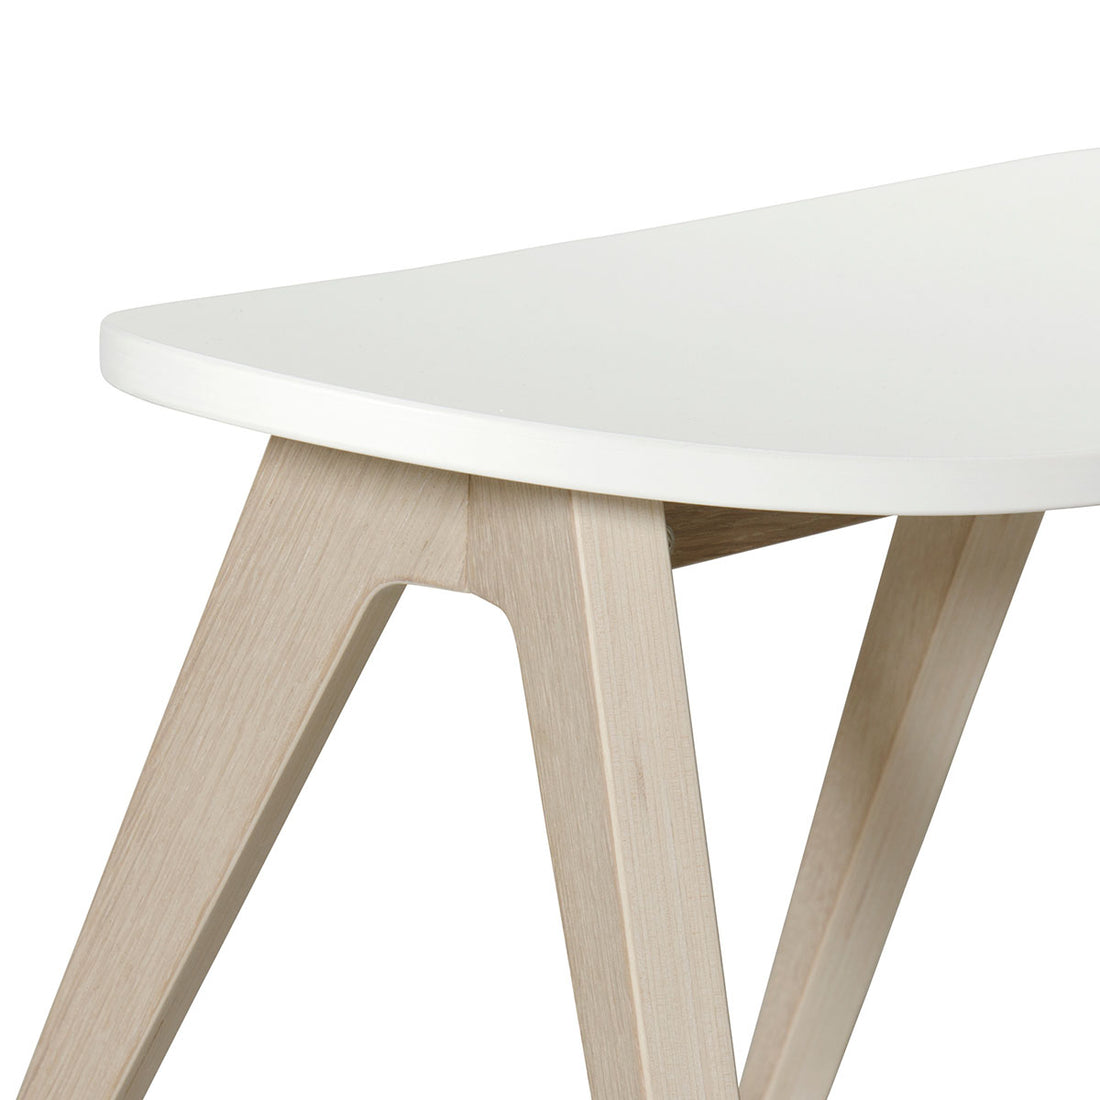 oliver-furniture-wood-pingpong-stool-white-oak- (3)